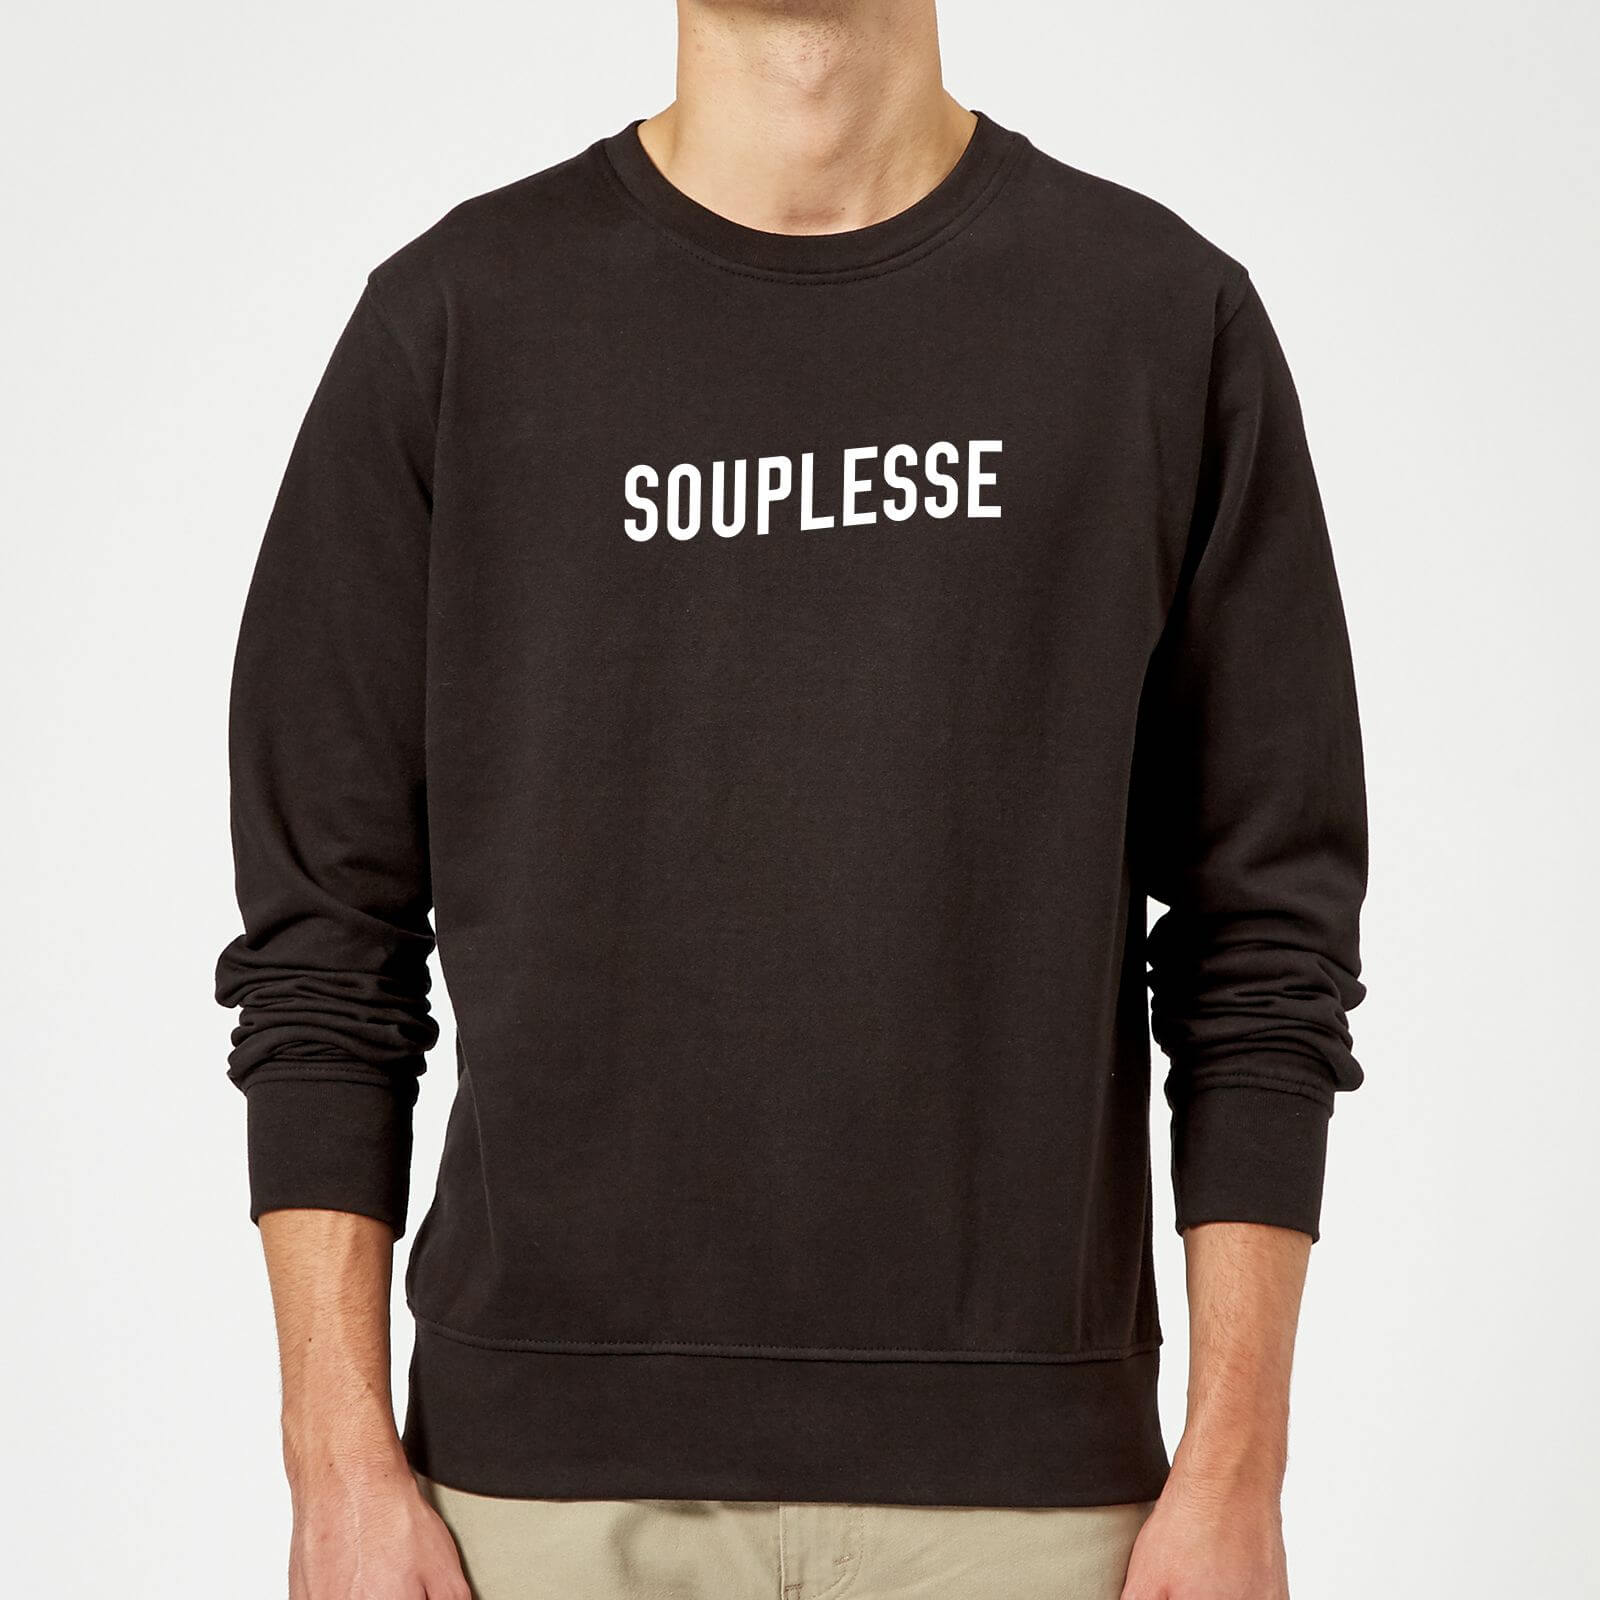 Souplesse Sweatshirt - XL - White